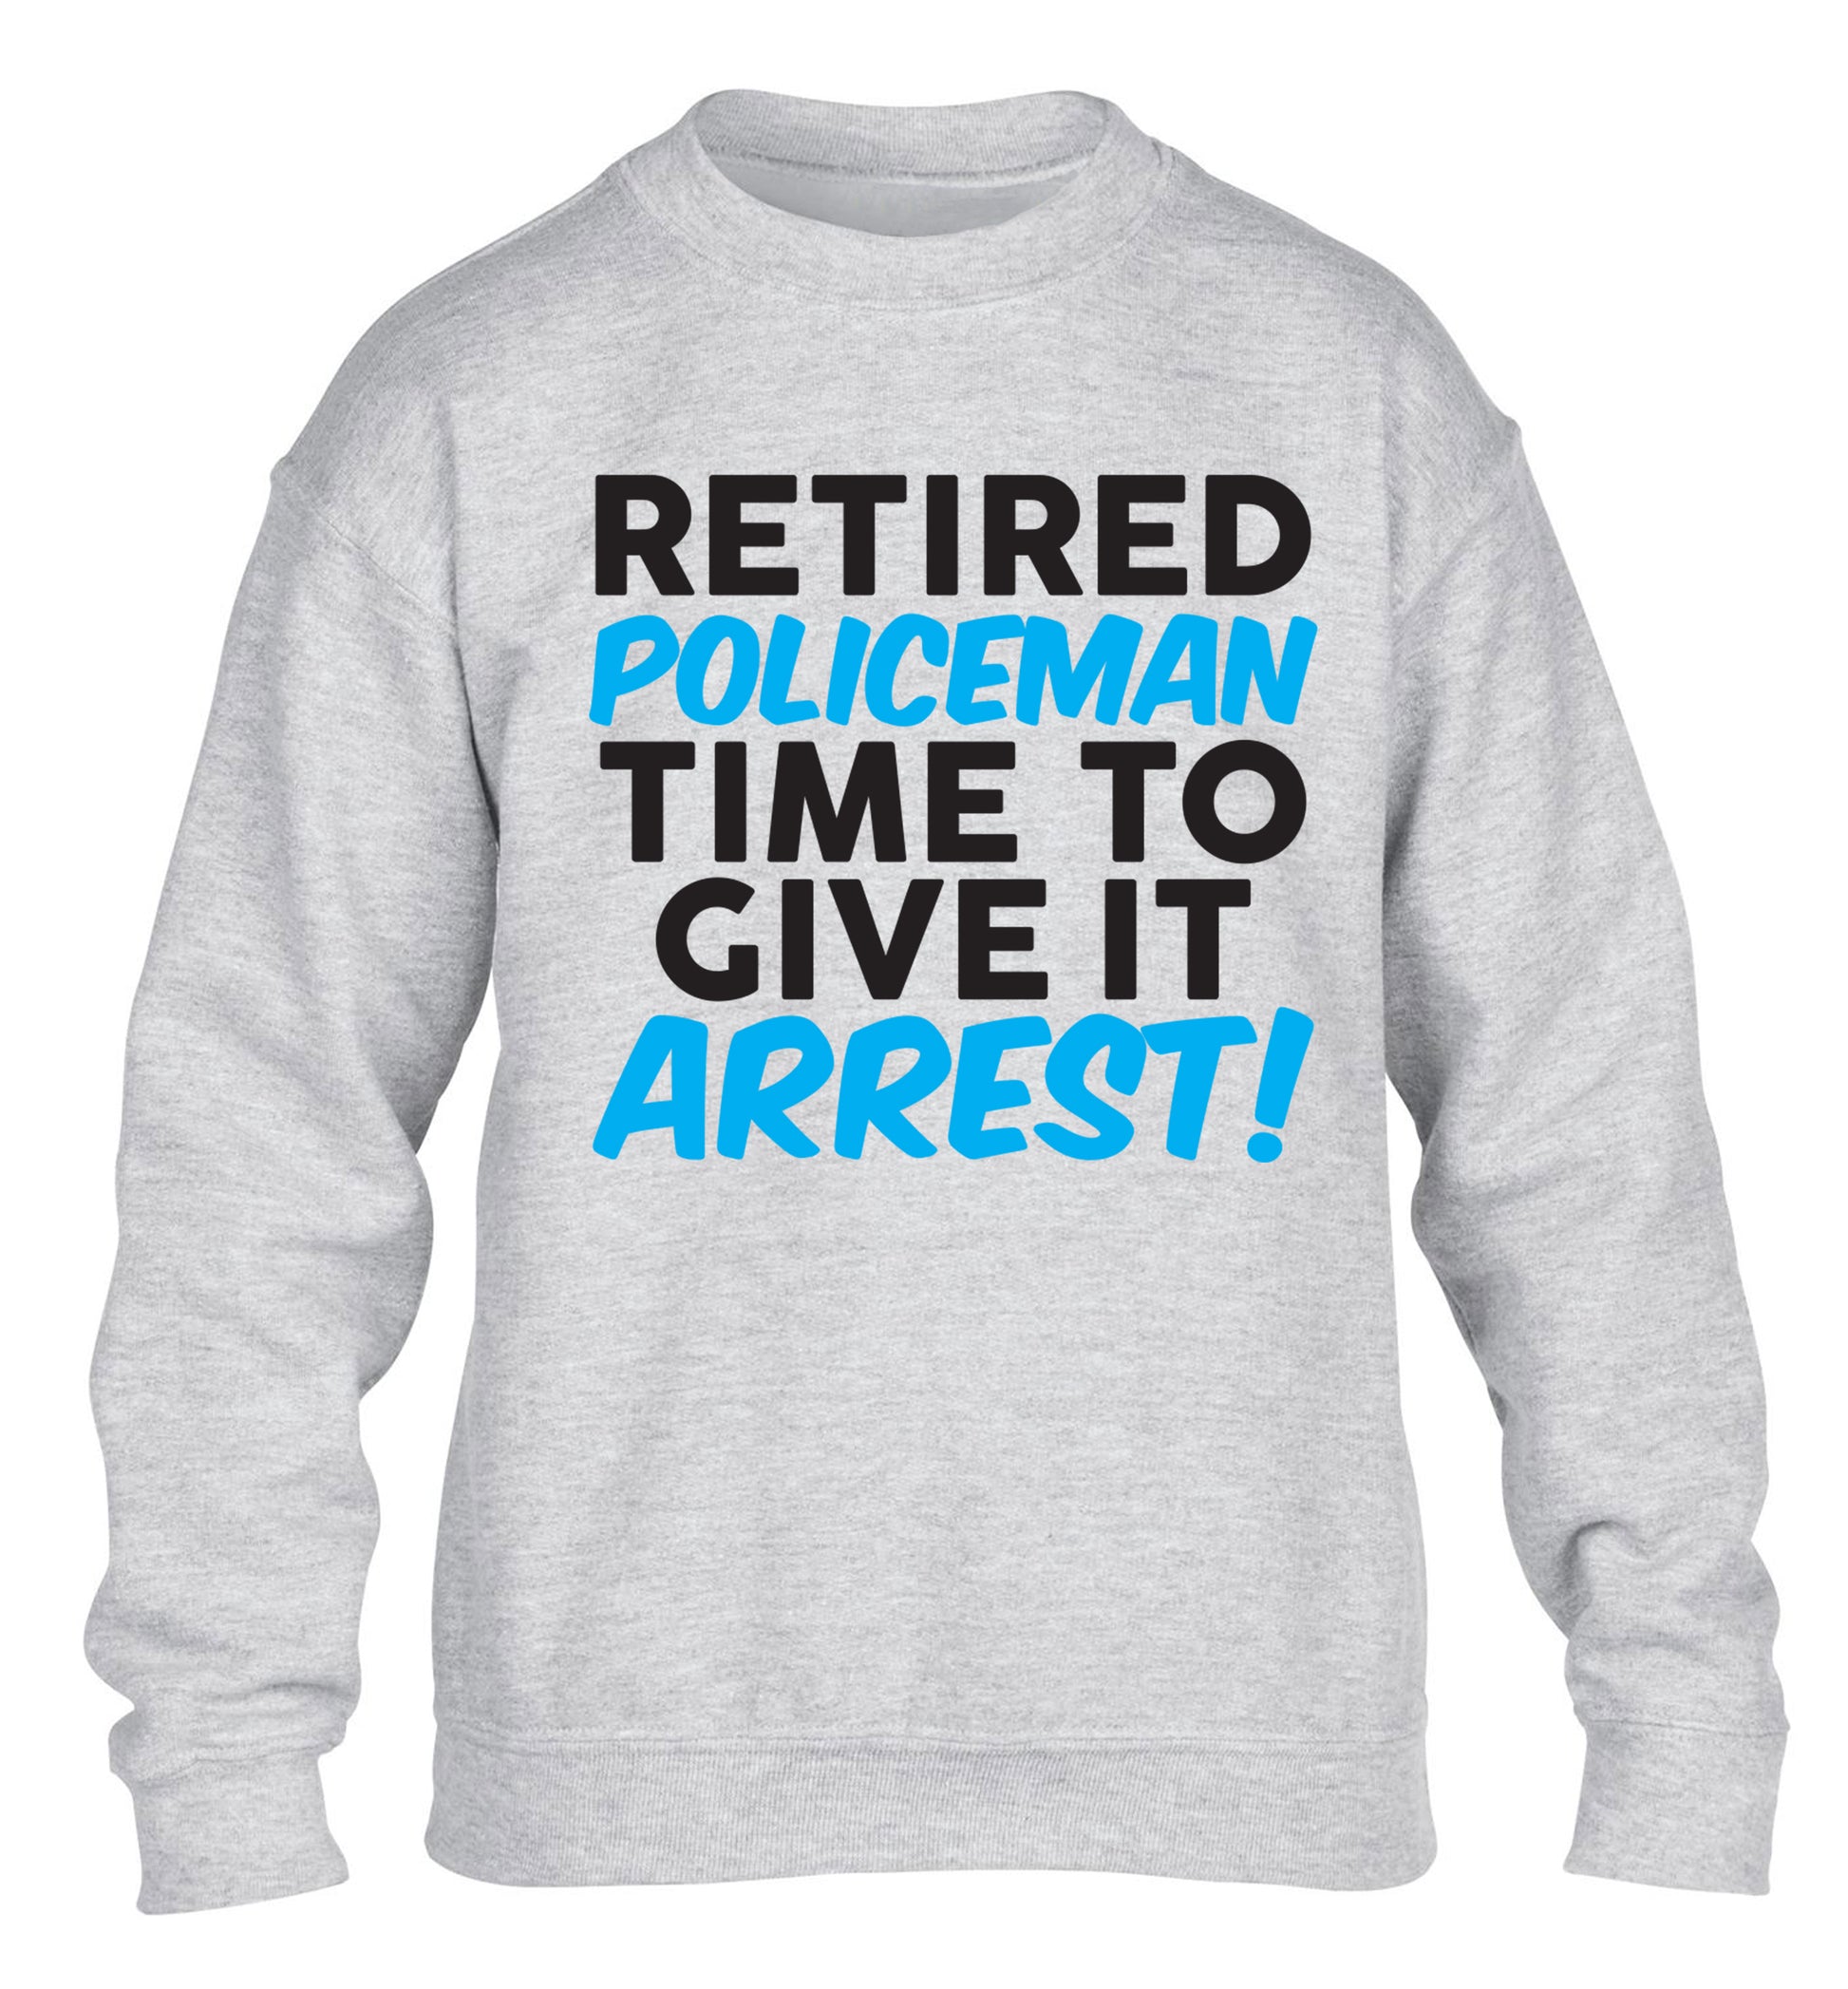 Retired policeman give it arresst! children's grey sweater 12-13 Years